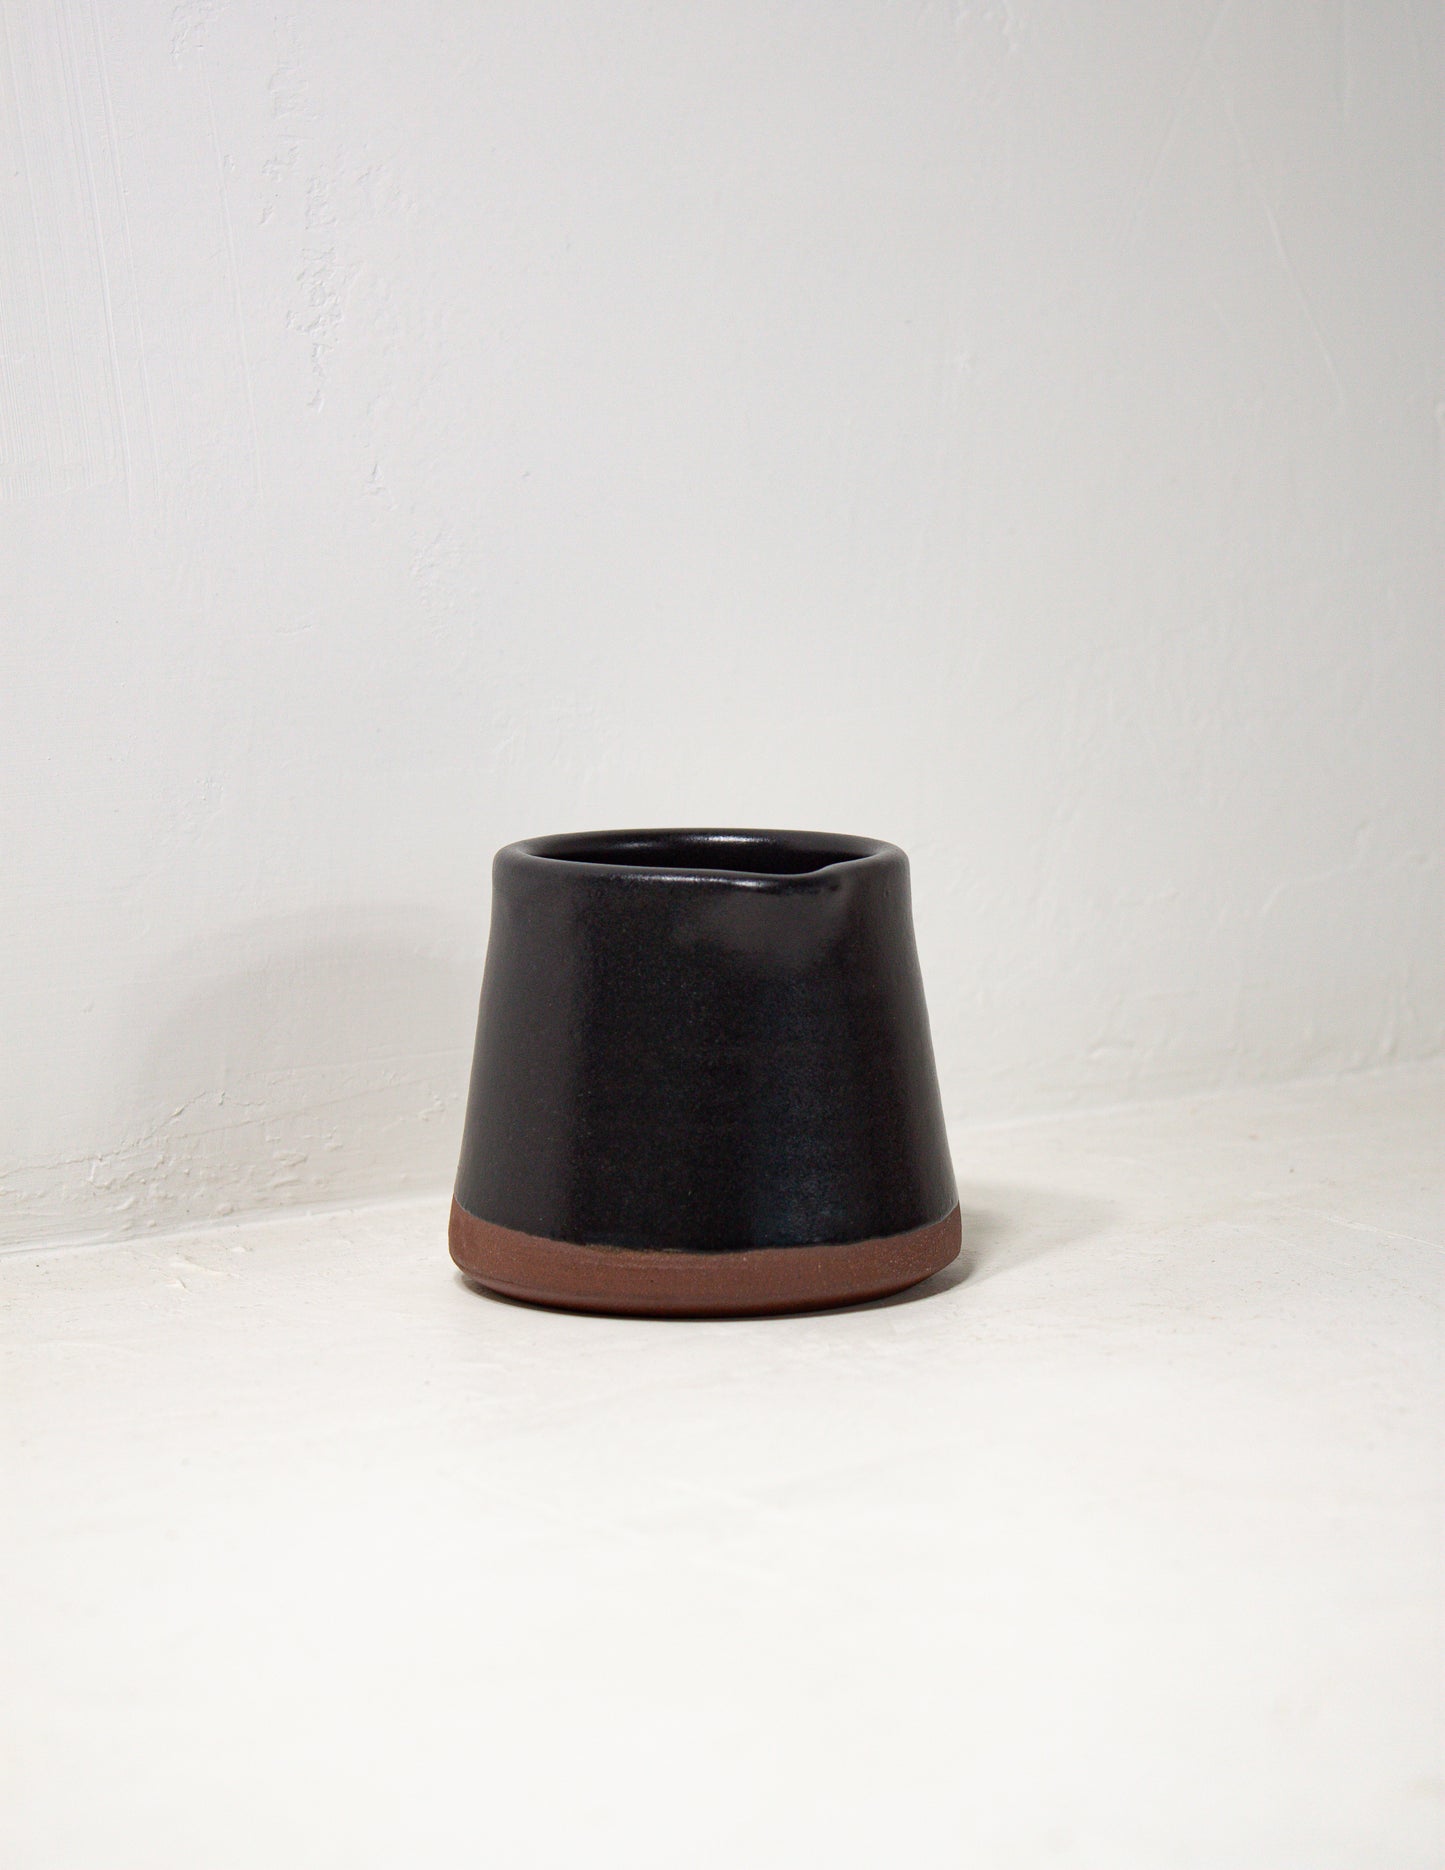 black coffee creamer pitcher handmade in the usa